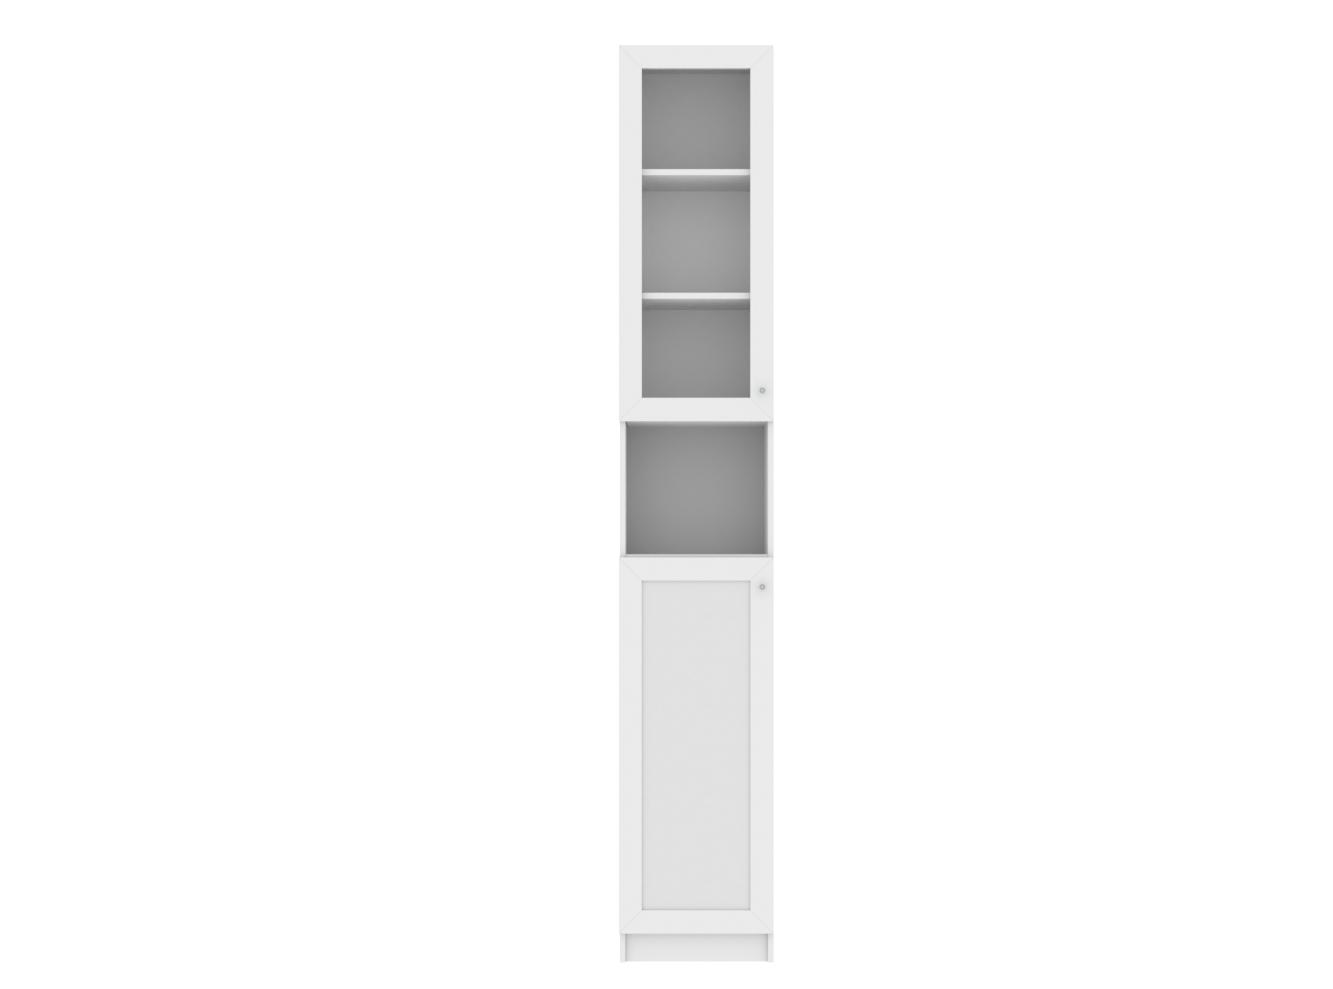 Книжный шкаф Билли 329 white ИКЕА (IKEA) изображение товара